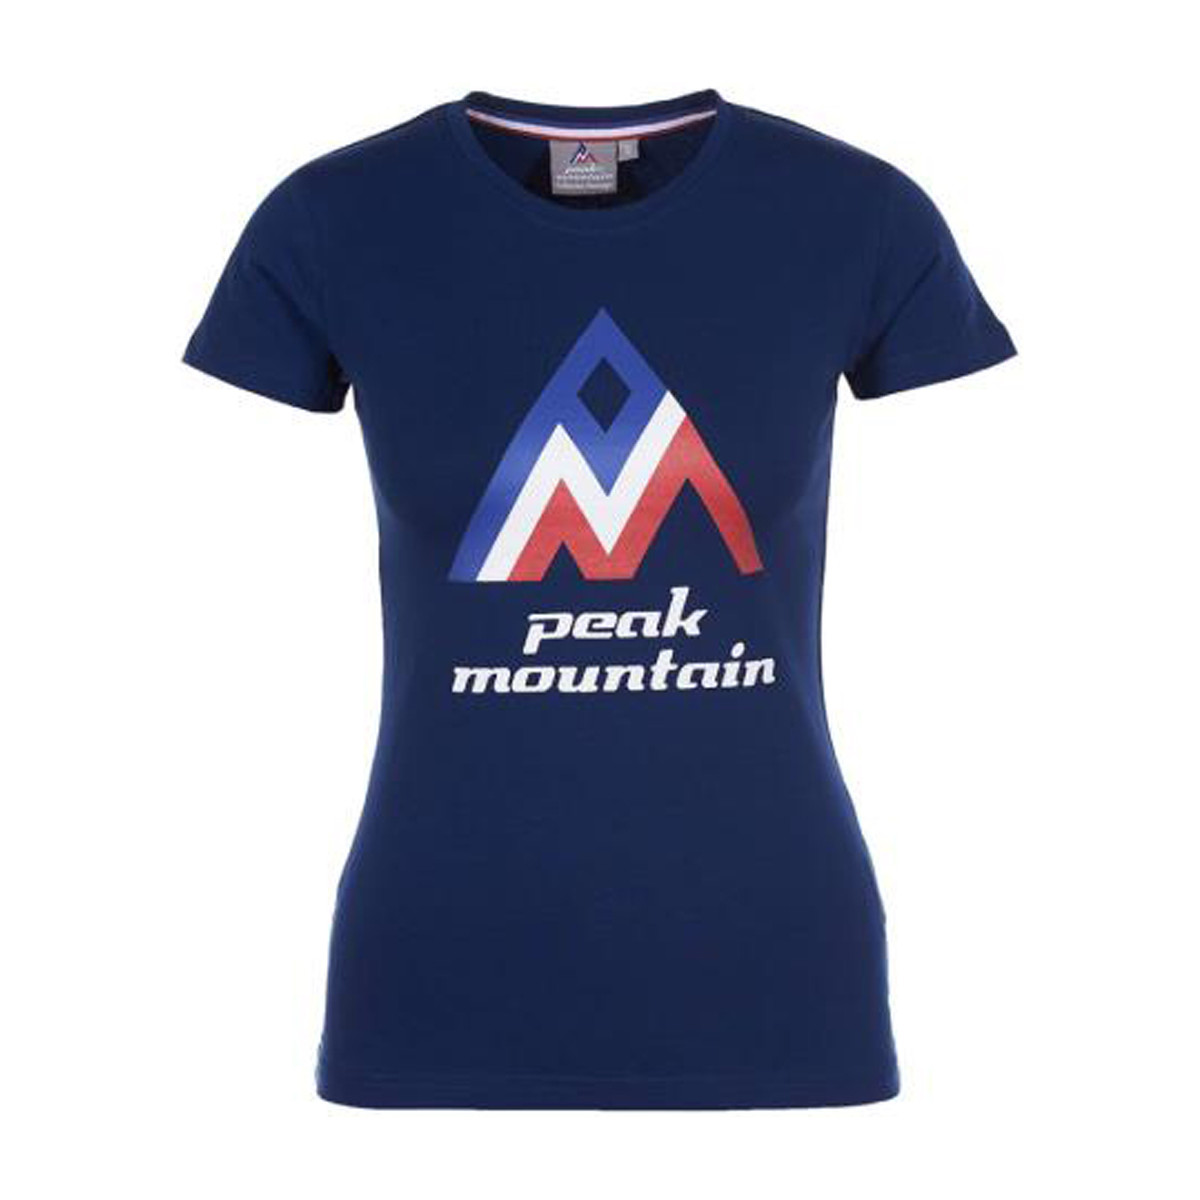 Textiel Dames T-shirts korte mouwen Peak Mountain T-shirt manches courtes femme ACIMES Marine